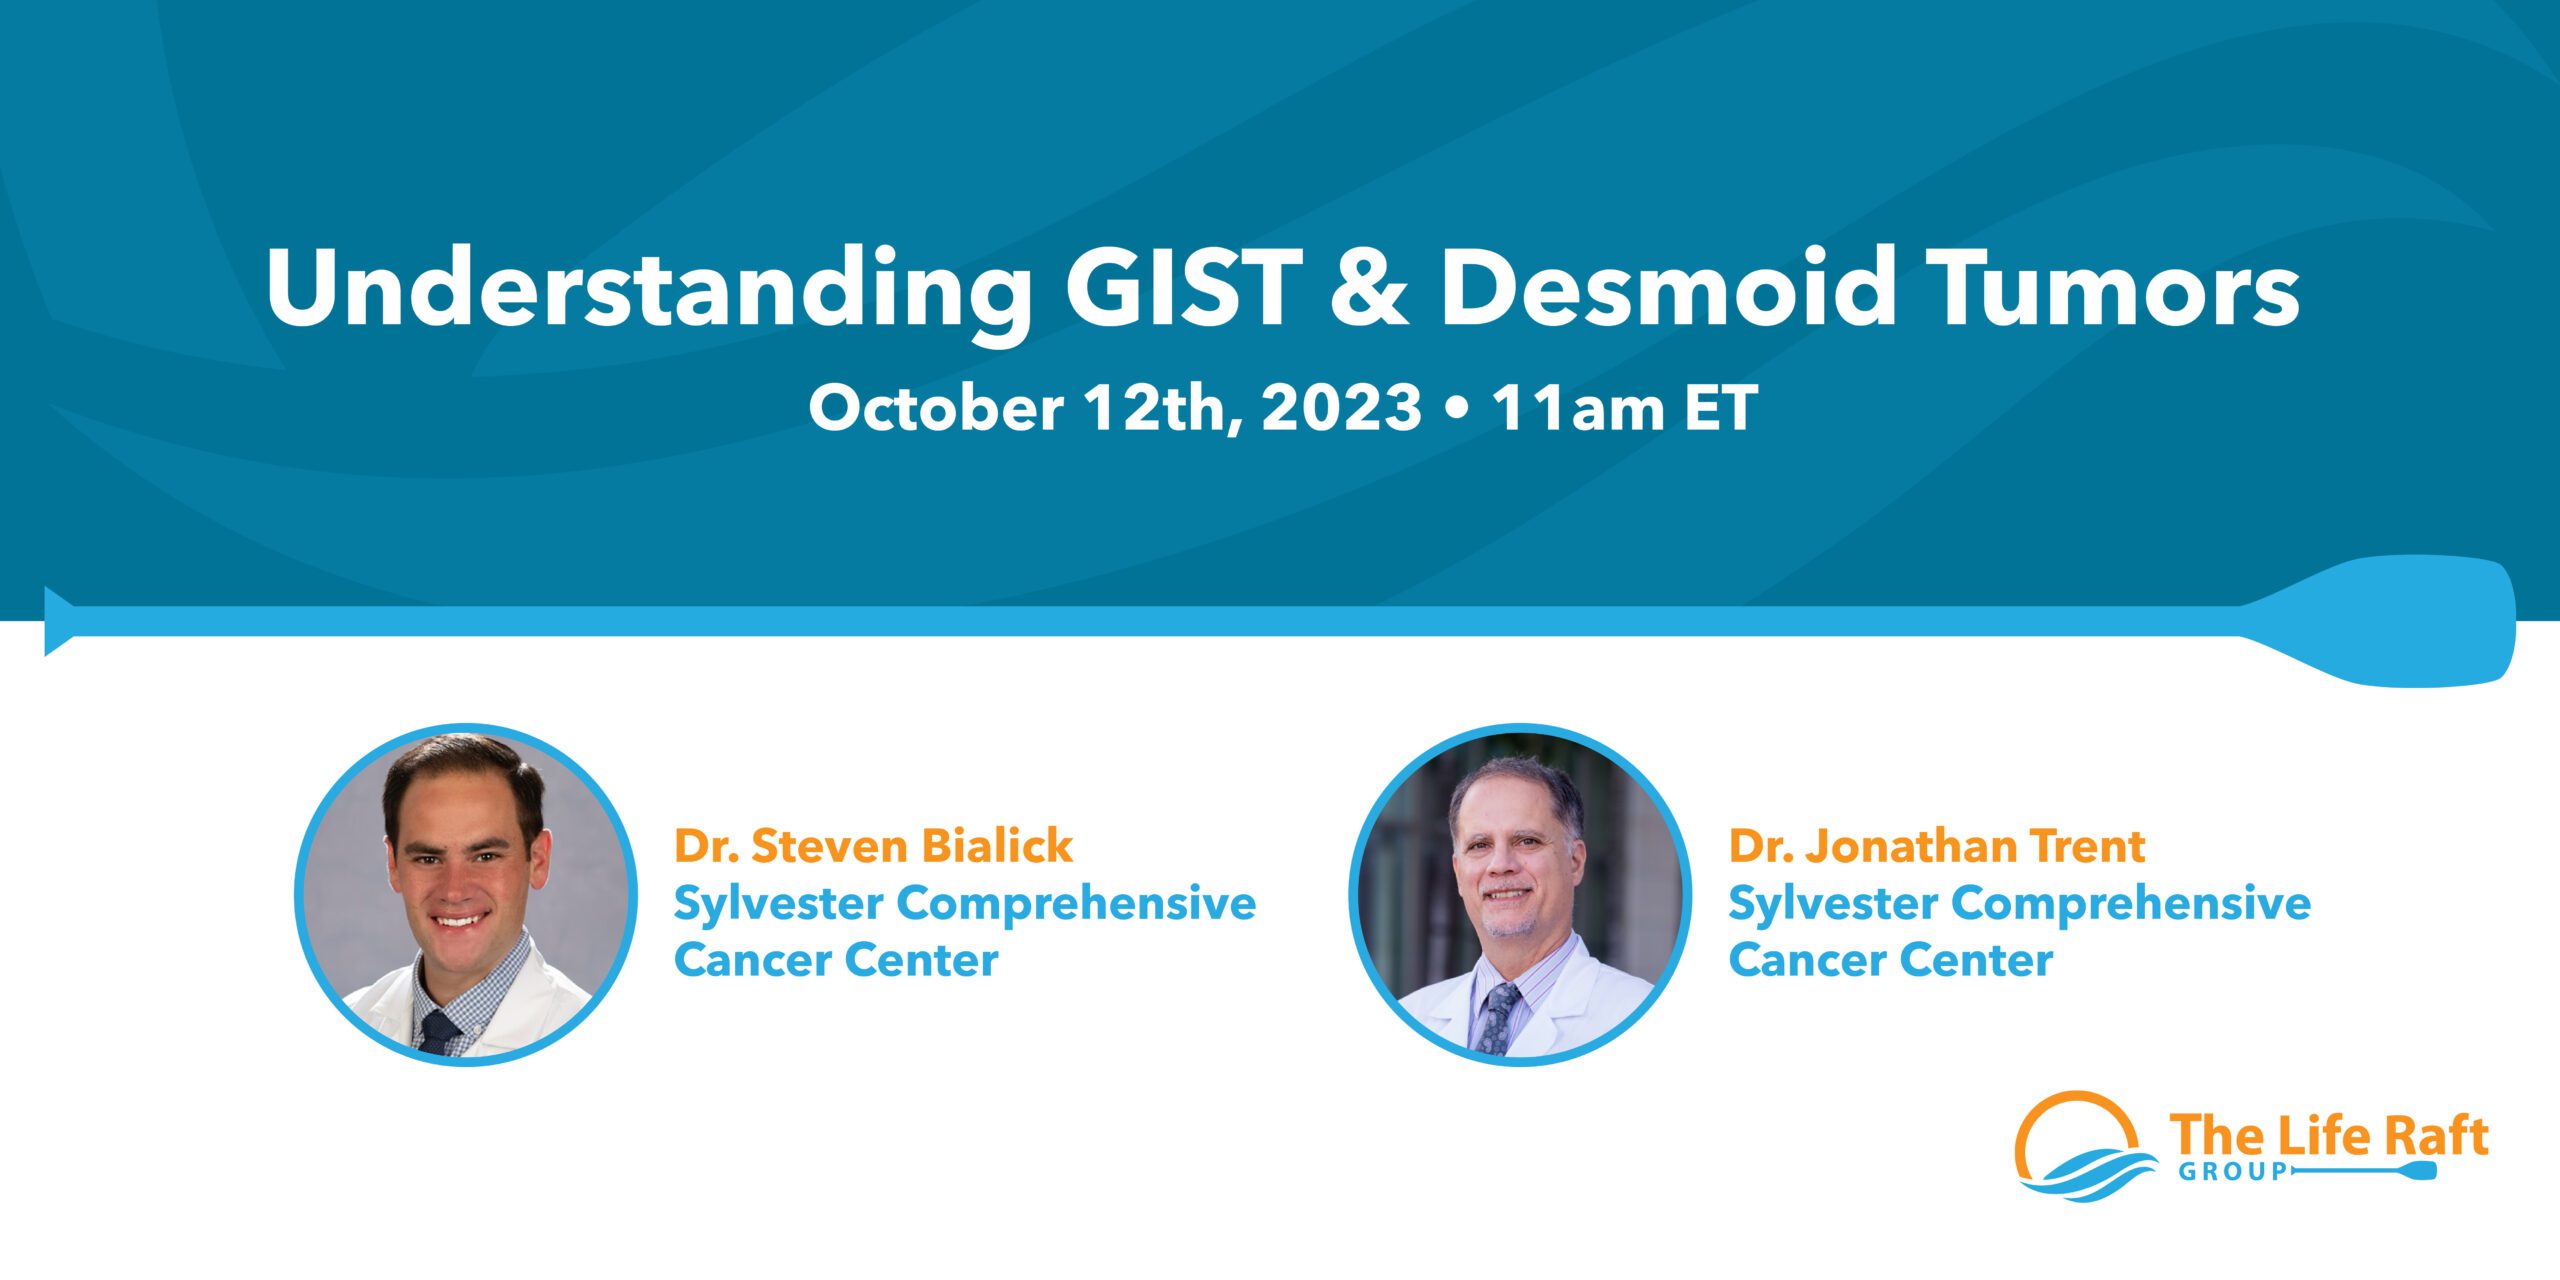 Understanding GIST & Desmoid Tumor banner